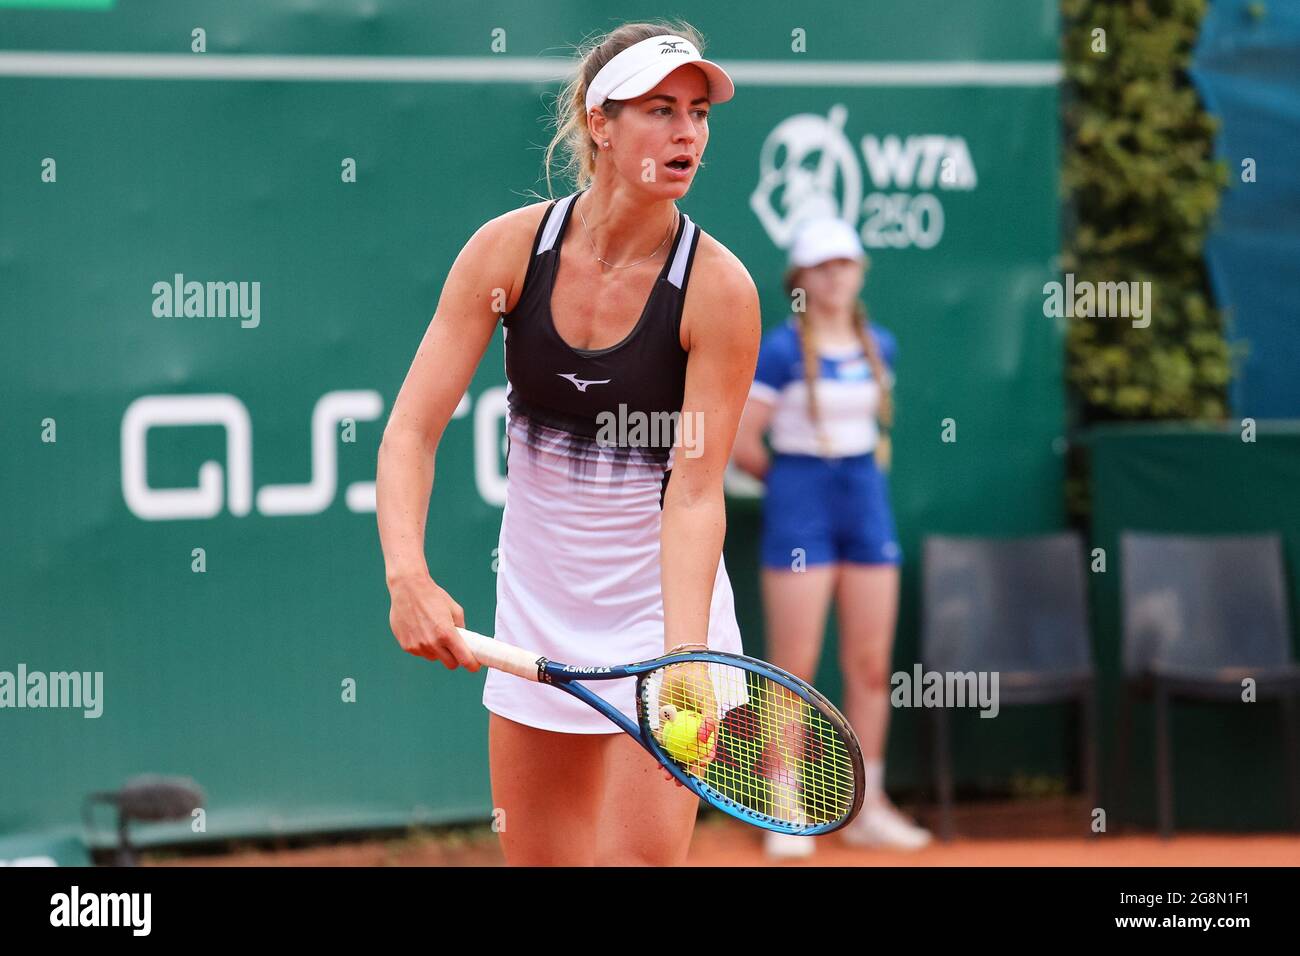 Anna Bondar (HUNGARY) plays against Anna Karolina Schmiedlova (SLOVAKIA)  during the BNP Paribas Poland Open Tournament (WTA 250 category) in Gdynia.  (Final score 6:2, 7:6, 6:1 for Bondar). (Photo by Grzesiek J?drzejewski/SOPA